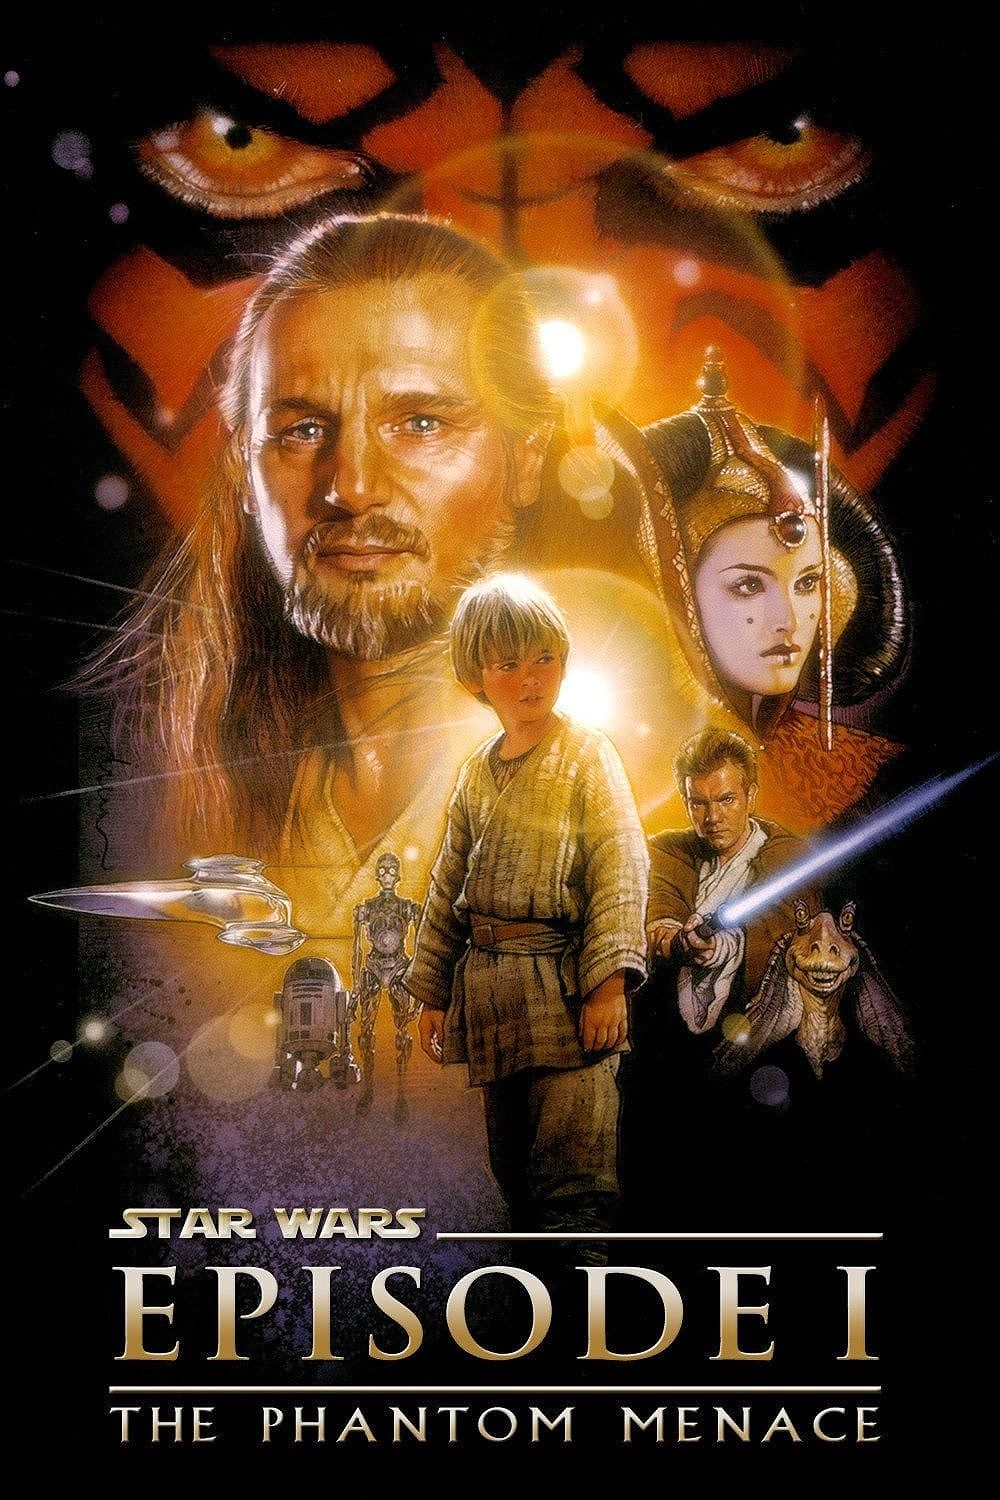 Ewan McGregor Surprises Fans at 25th Anniversary Screening of Star Wars: Episode I - The Phantom Menace - 1229284706